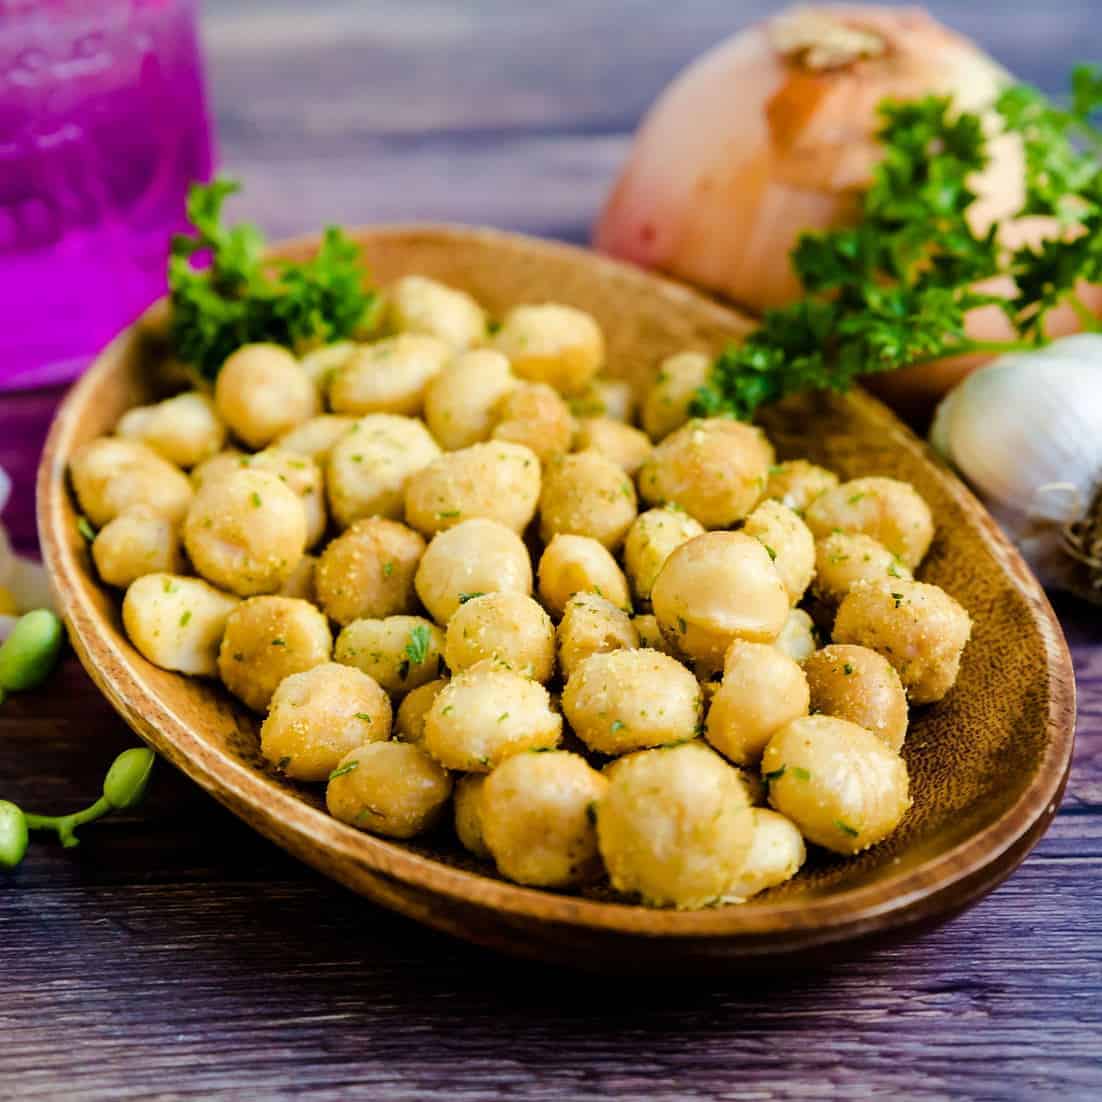 Pull Stirp Vegetable Onion Nuts Garlic shredder Chopper For Salad Coleslaw Puree 648865892561 | eBay